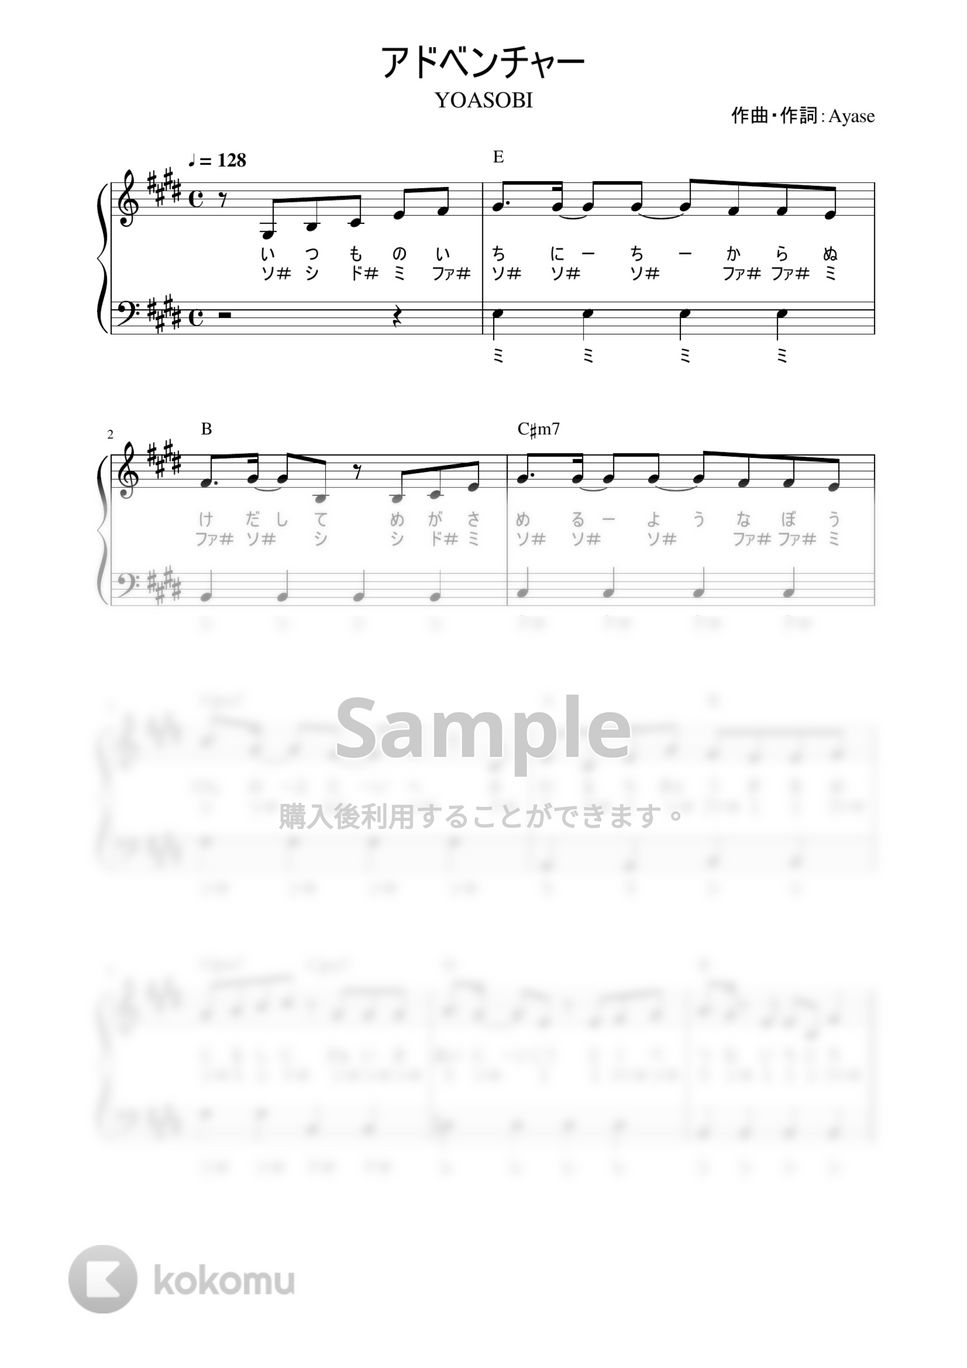 YOASOBI - アドベンチャー (かんたん / 歌詞付き / ドレミ付き / 初心者) by piano.tokyo